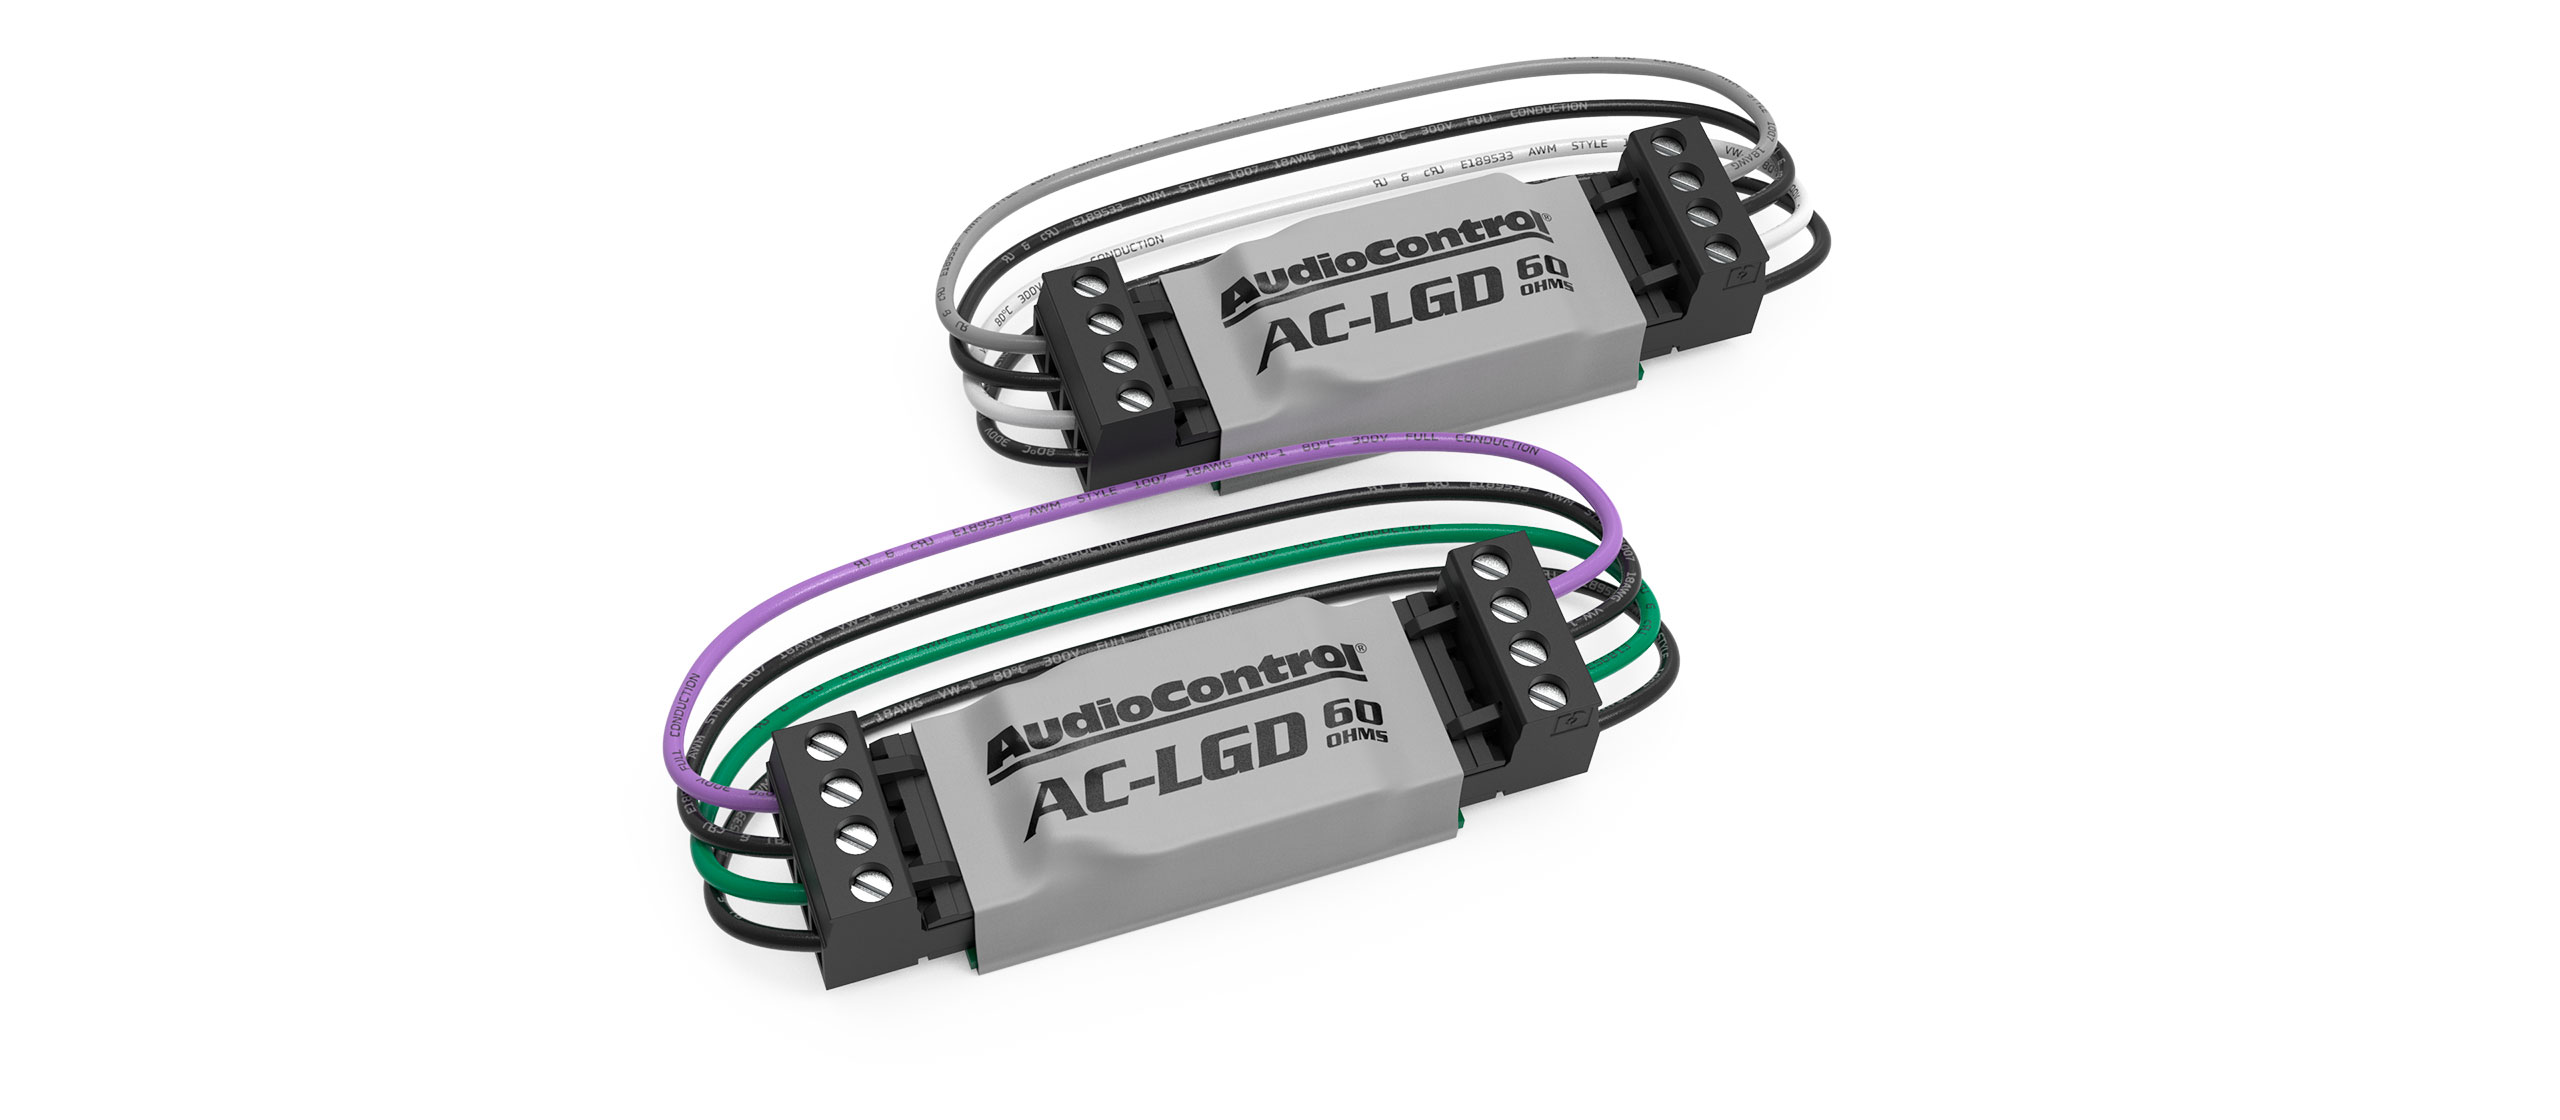 ac-lgd-60-plugged